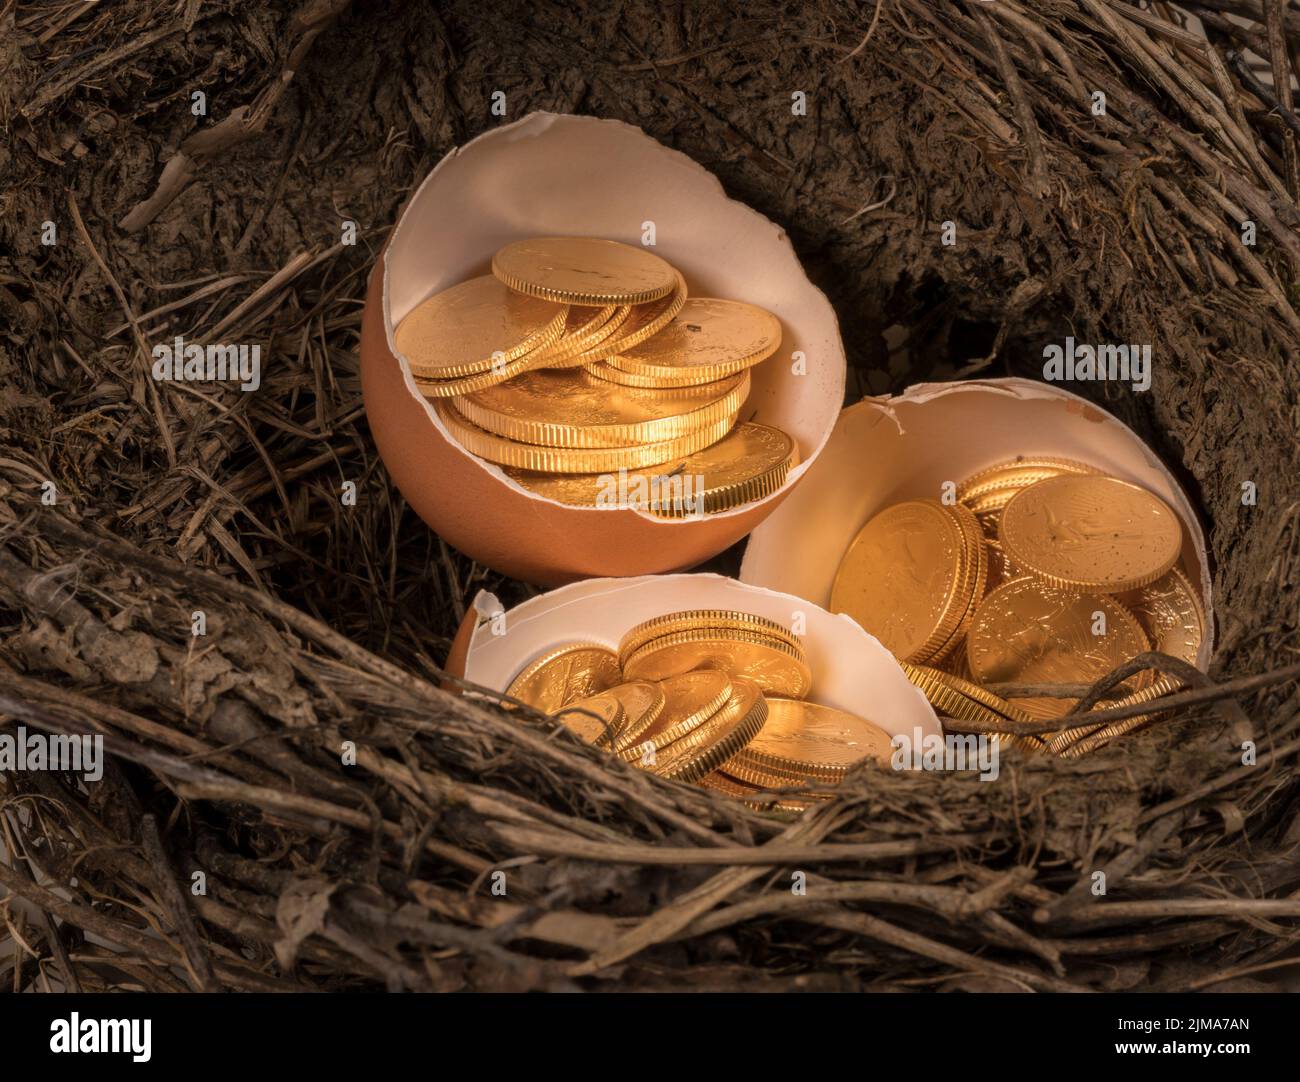 Pure gold coins in egg shell illustrating nest egg Stock Photo